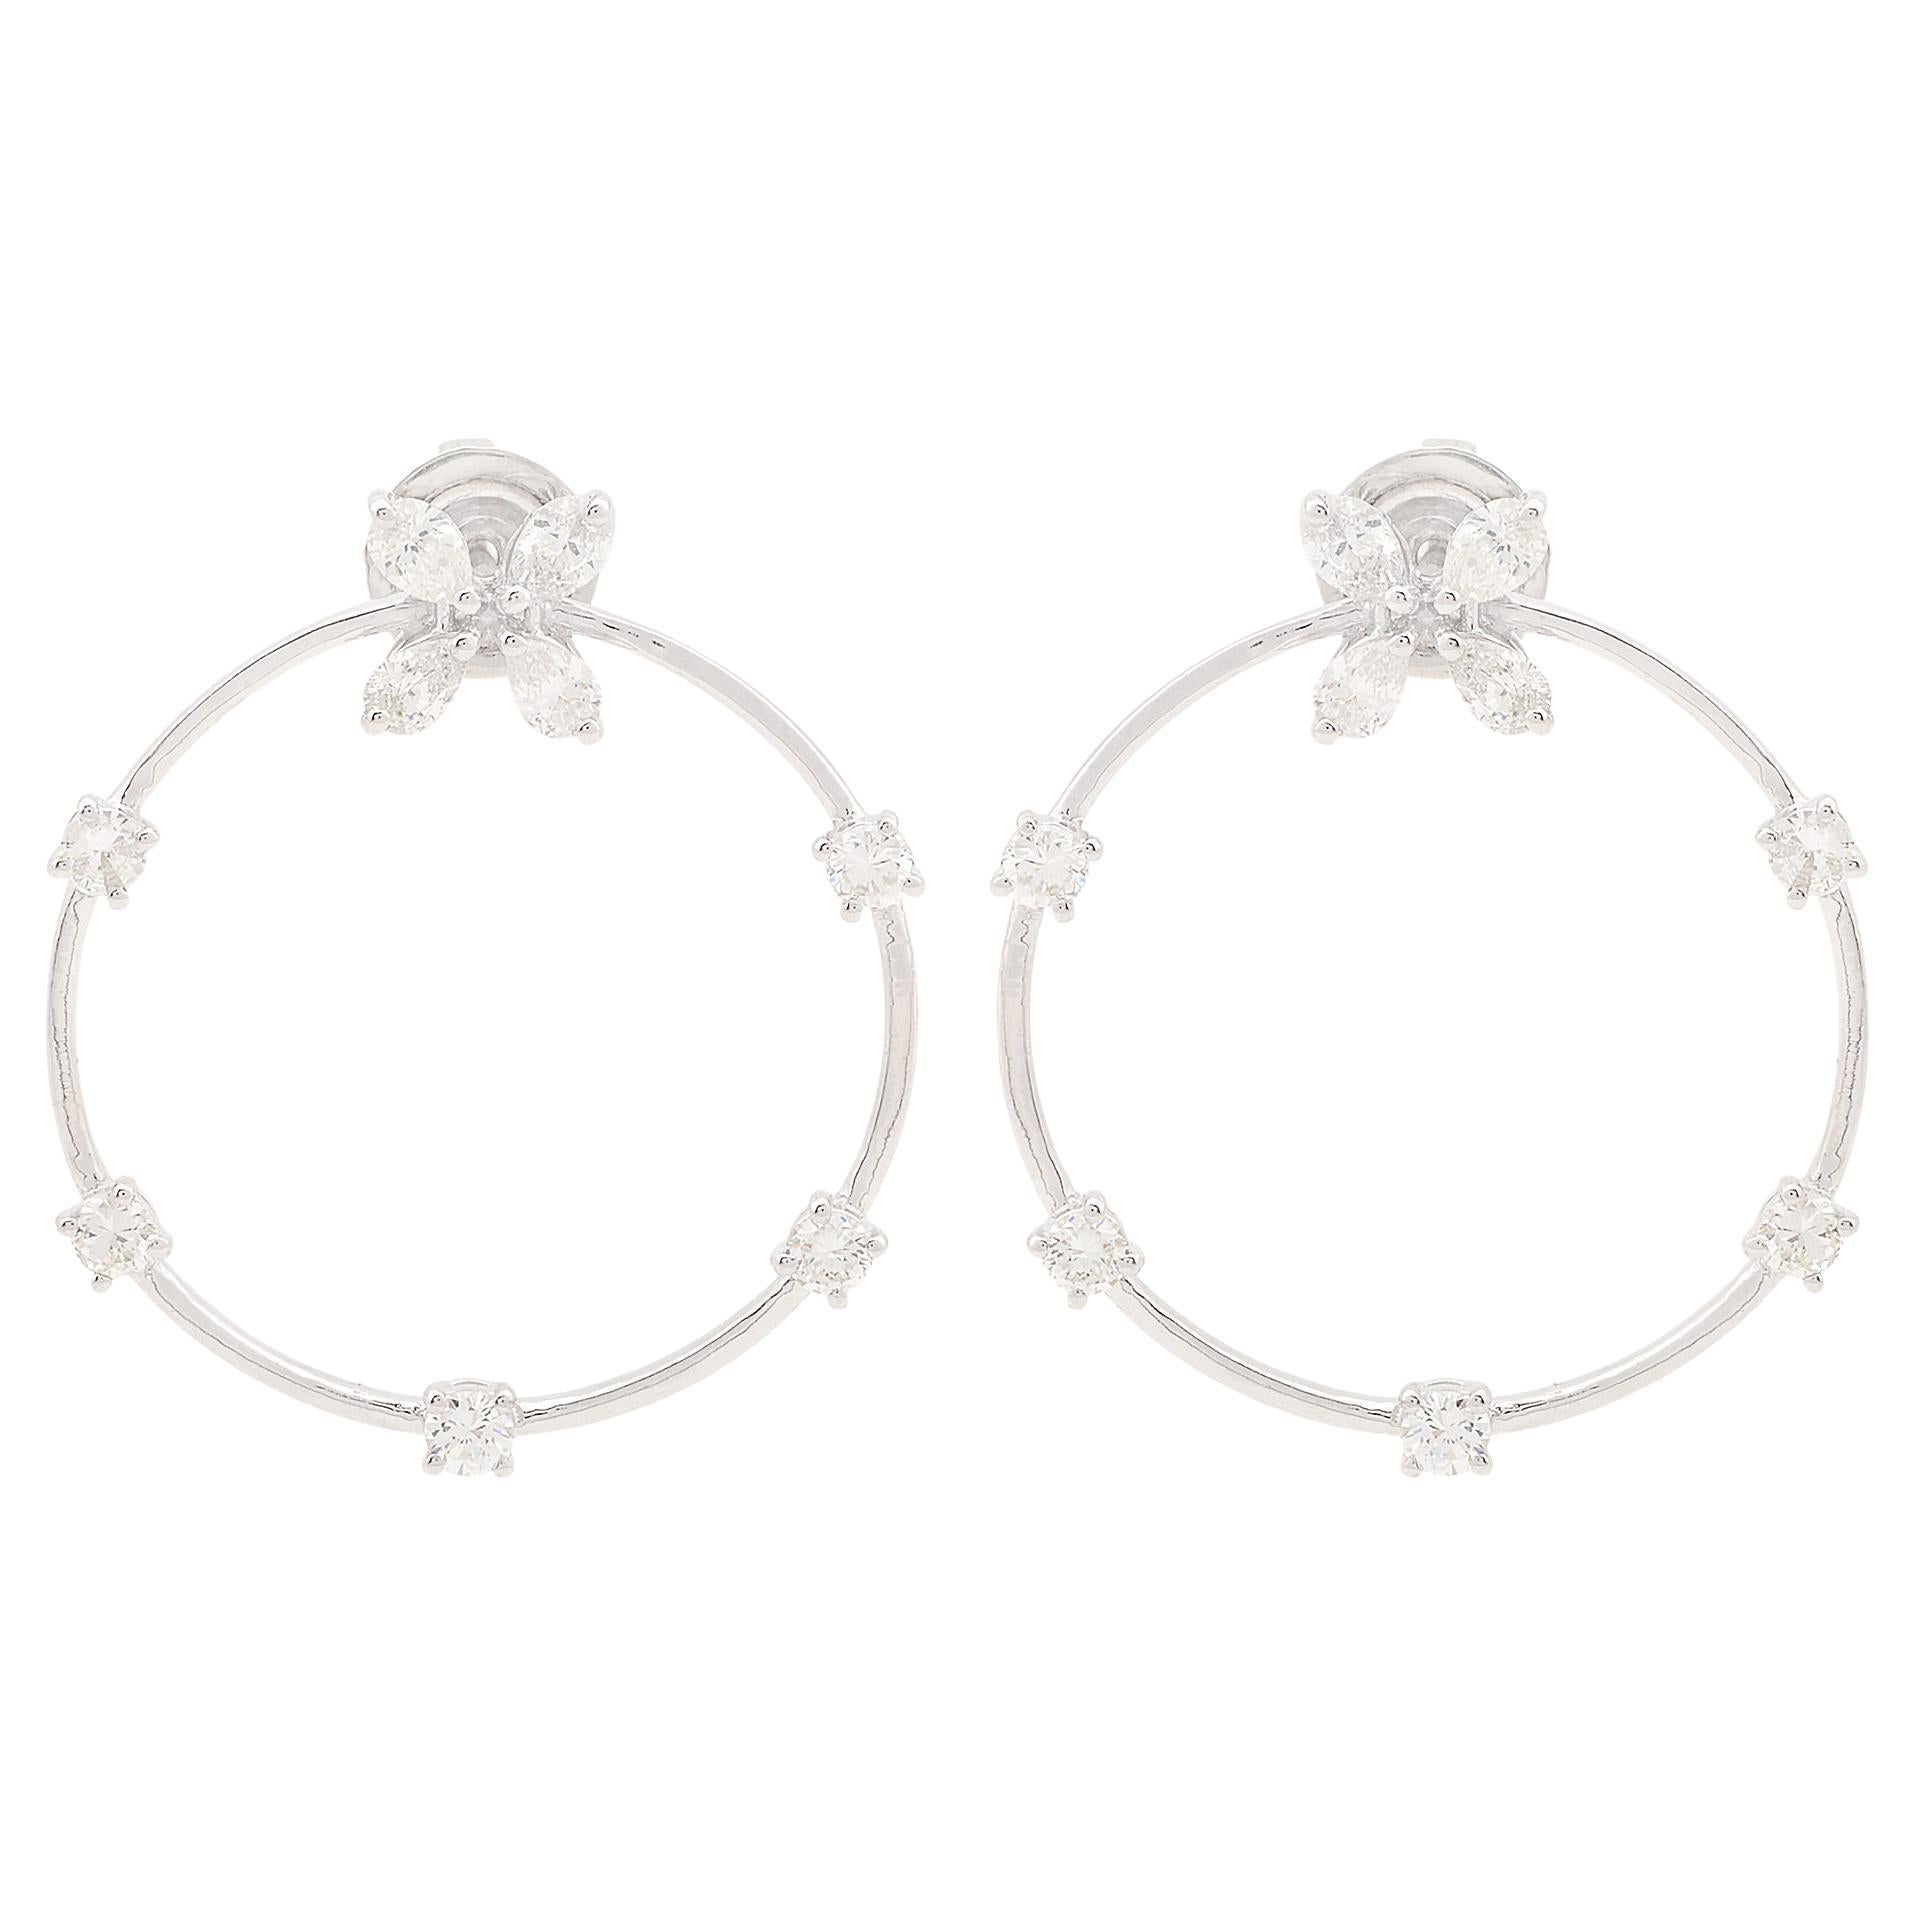 1.55 Carat Pear Diamond Circle Stud Earrings Solid 14k White Gold Fine Jewelry